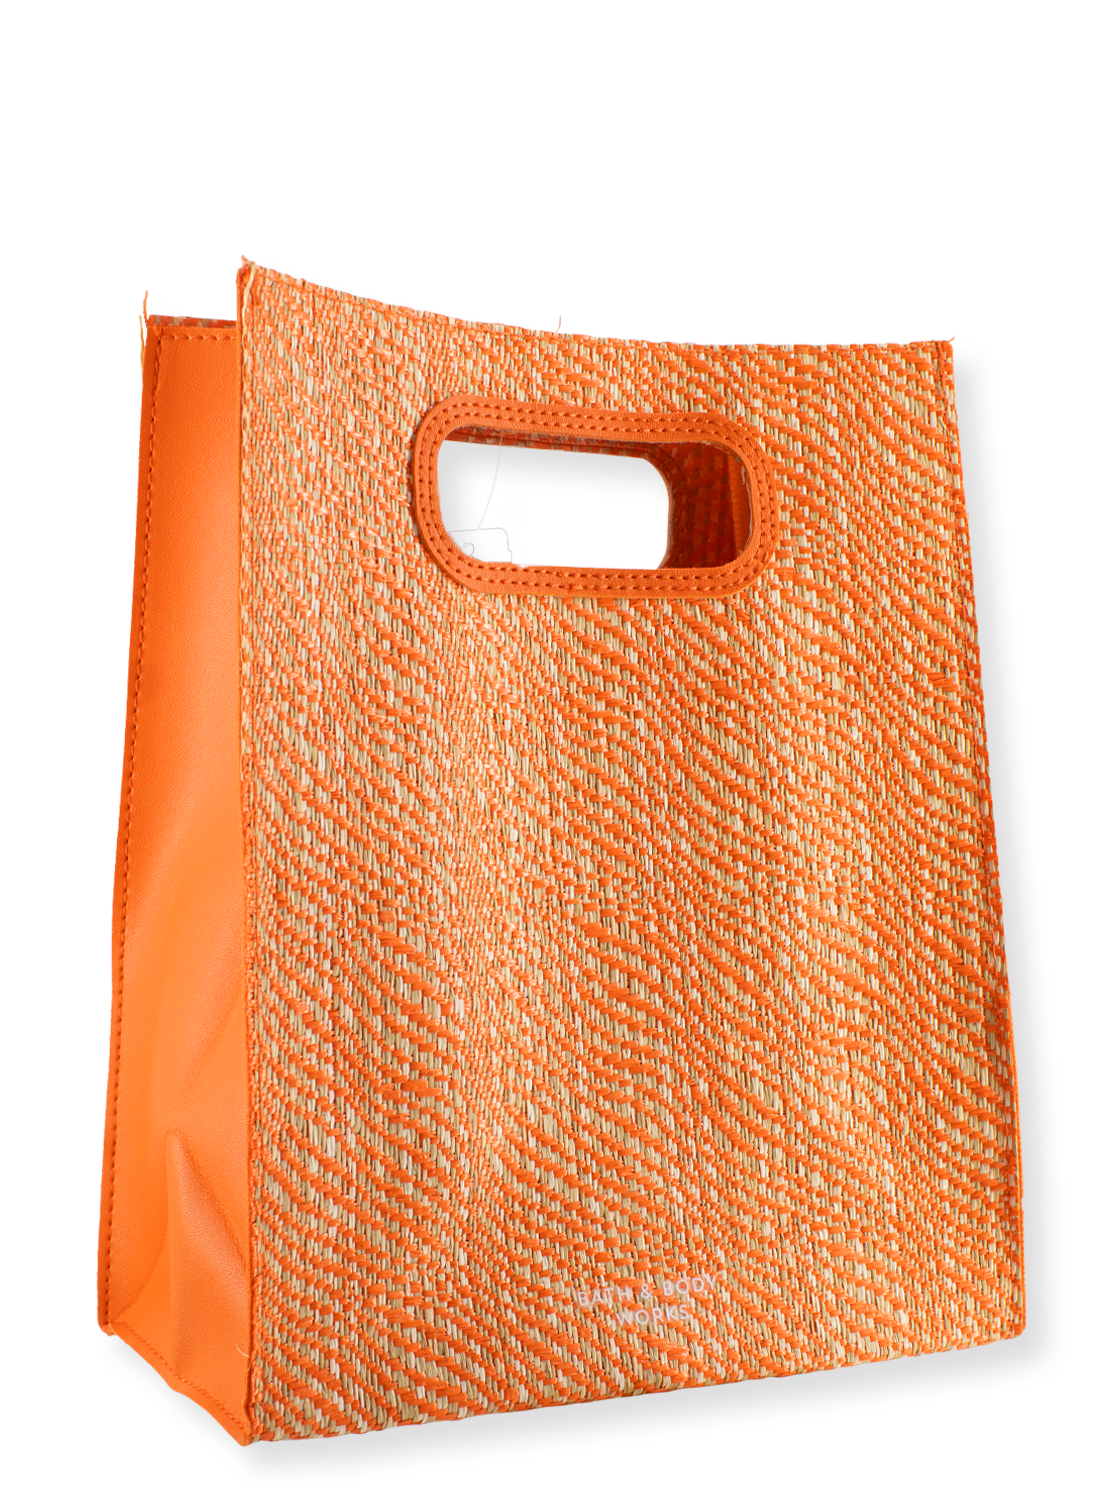 Gift bag - orange raffia - large